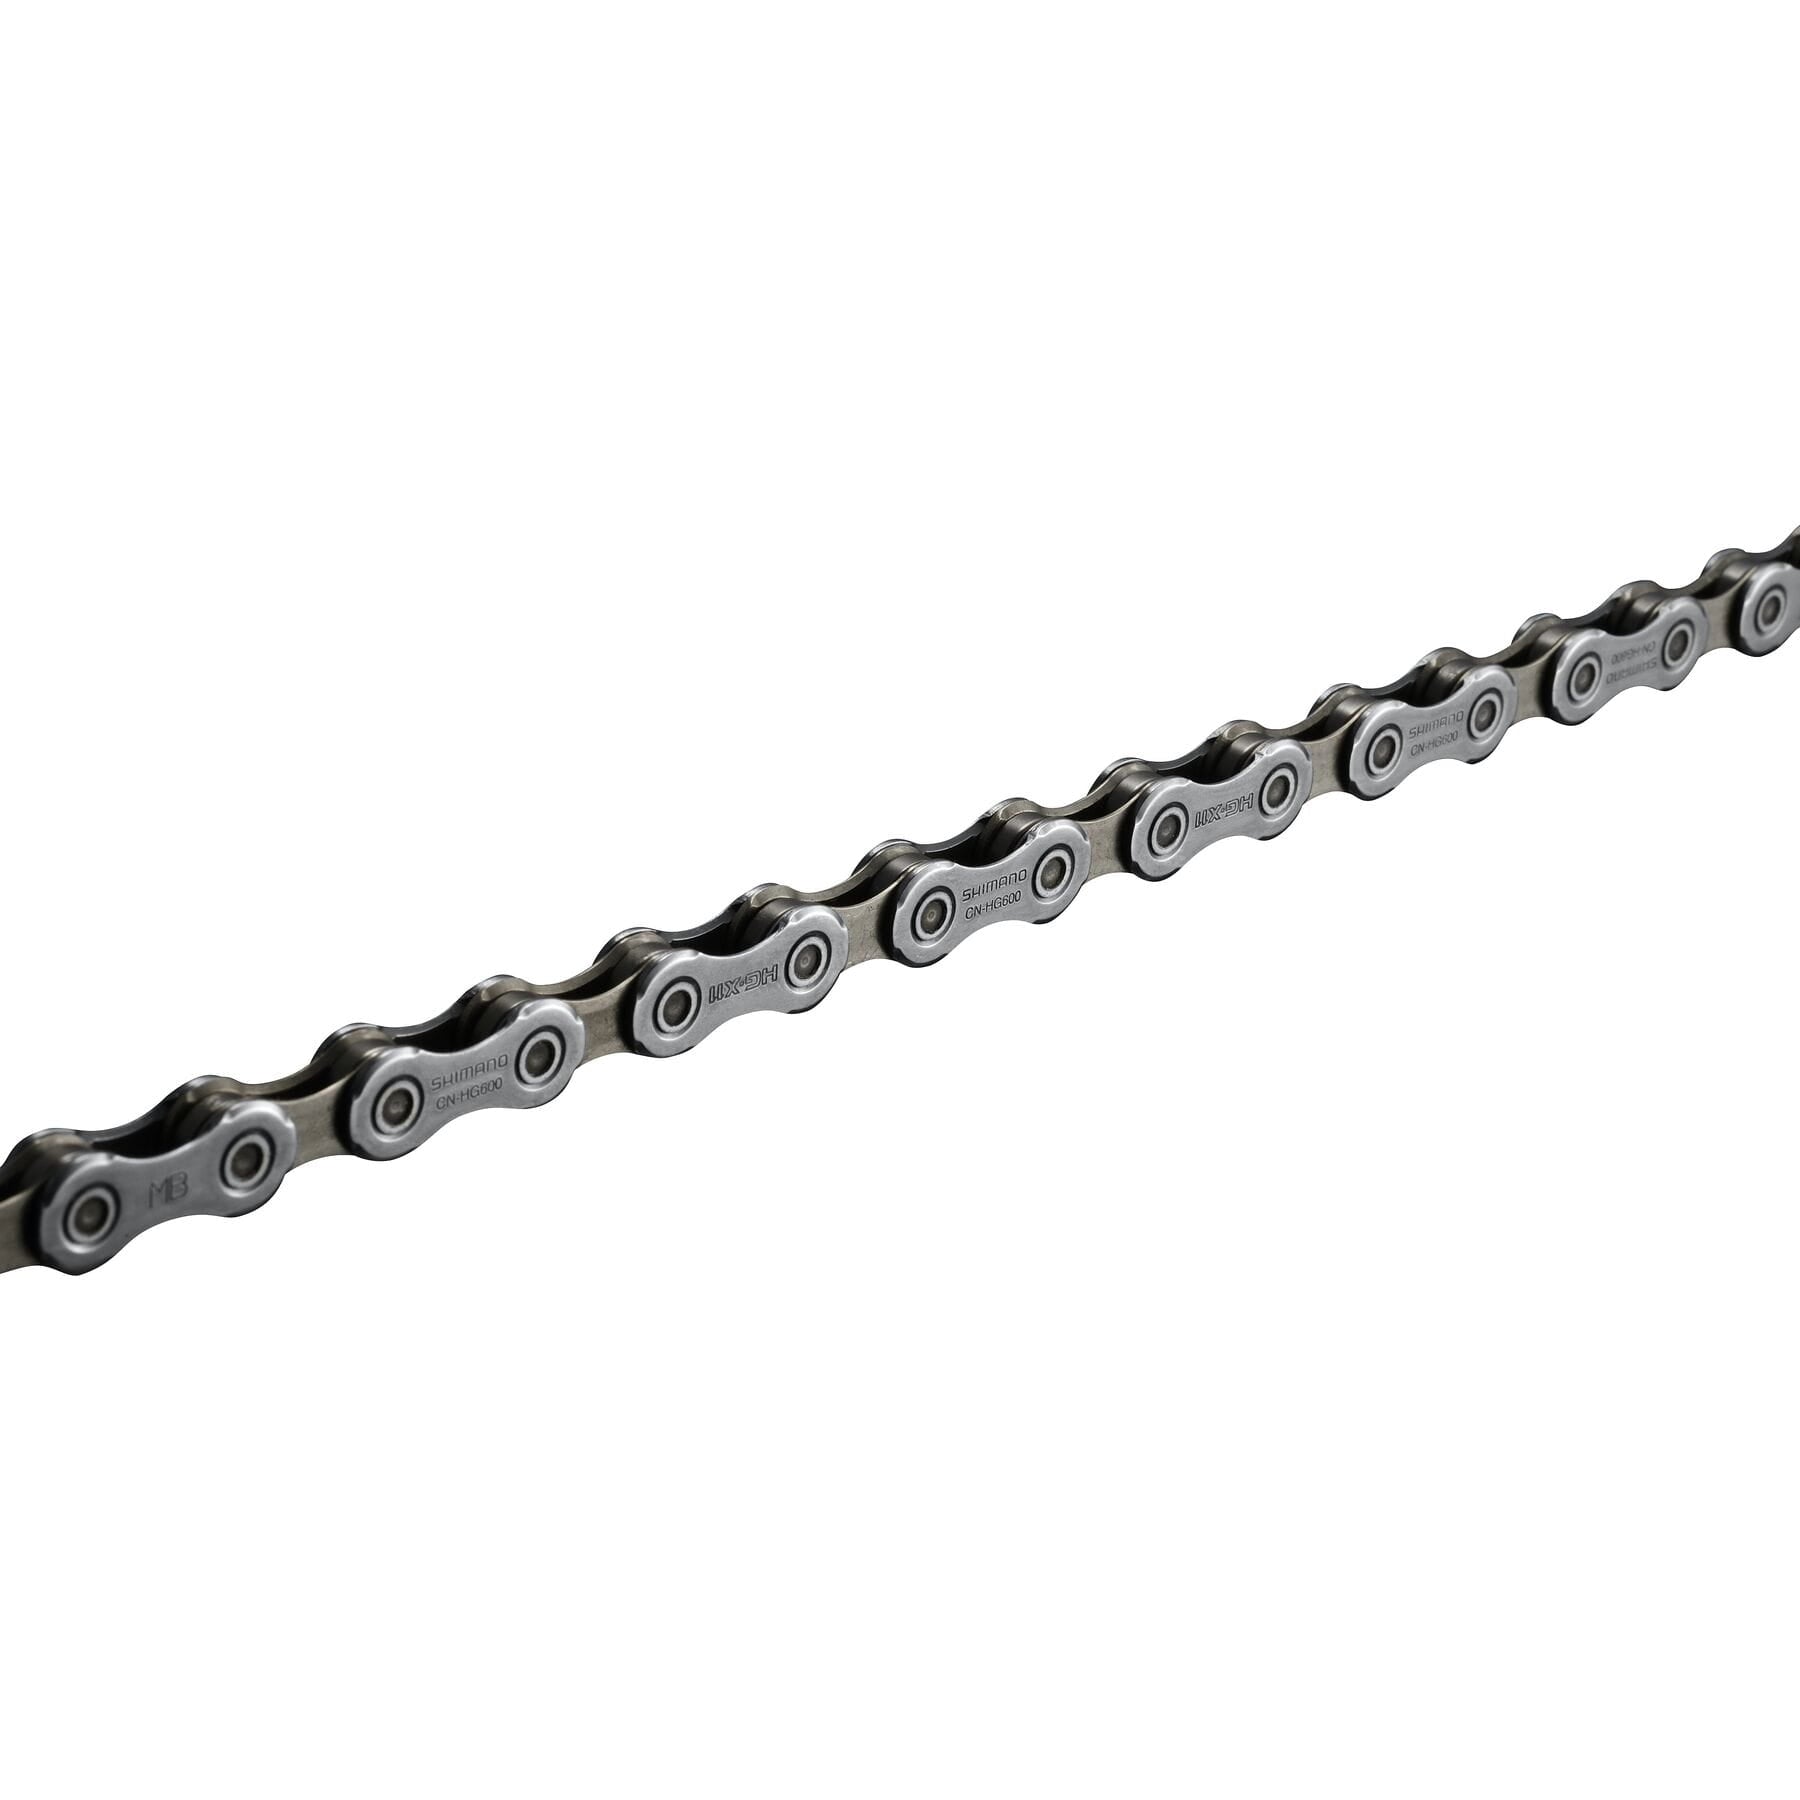 Shimano chain for 105/SLX